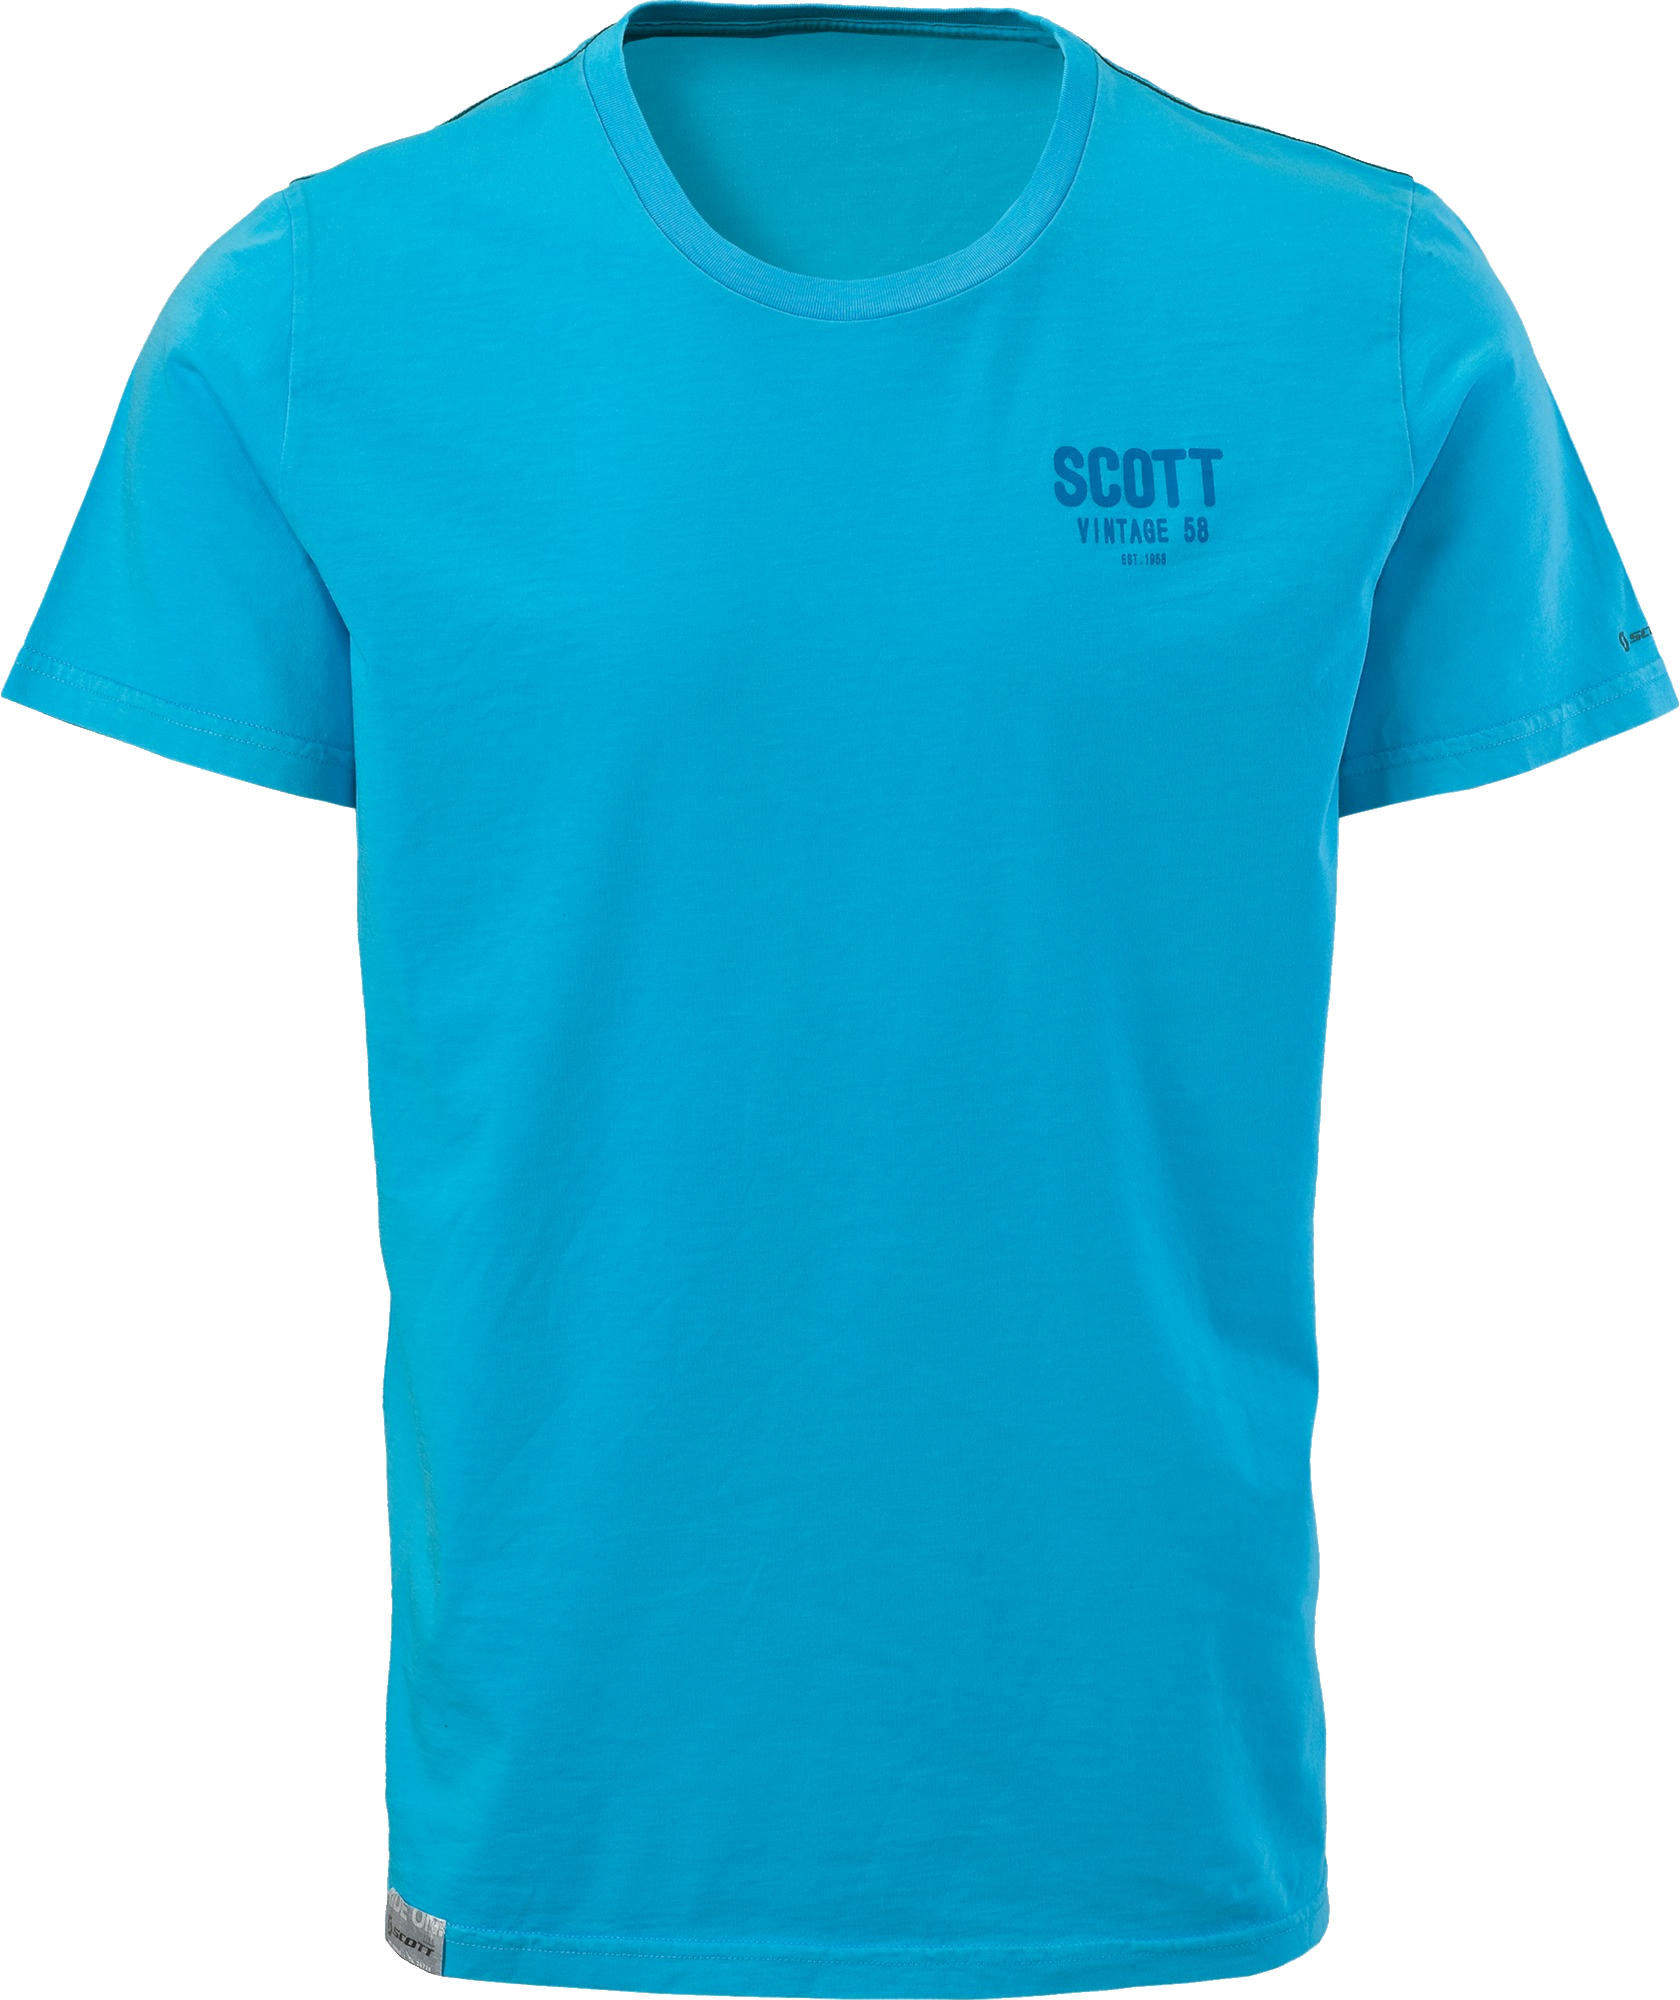 Scott Polo Shirt PNG Image